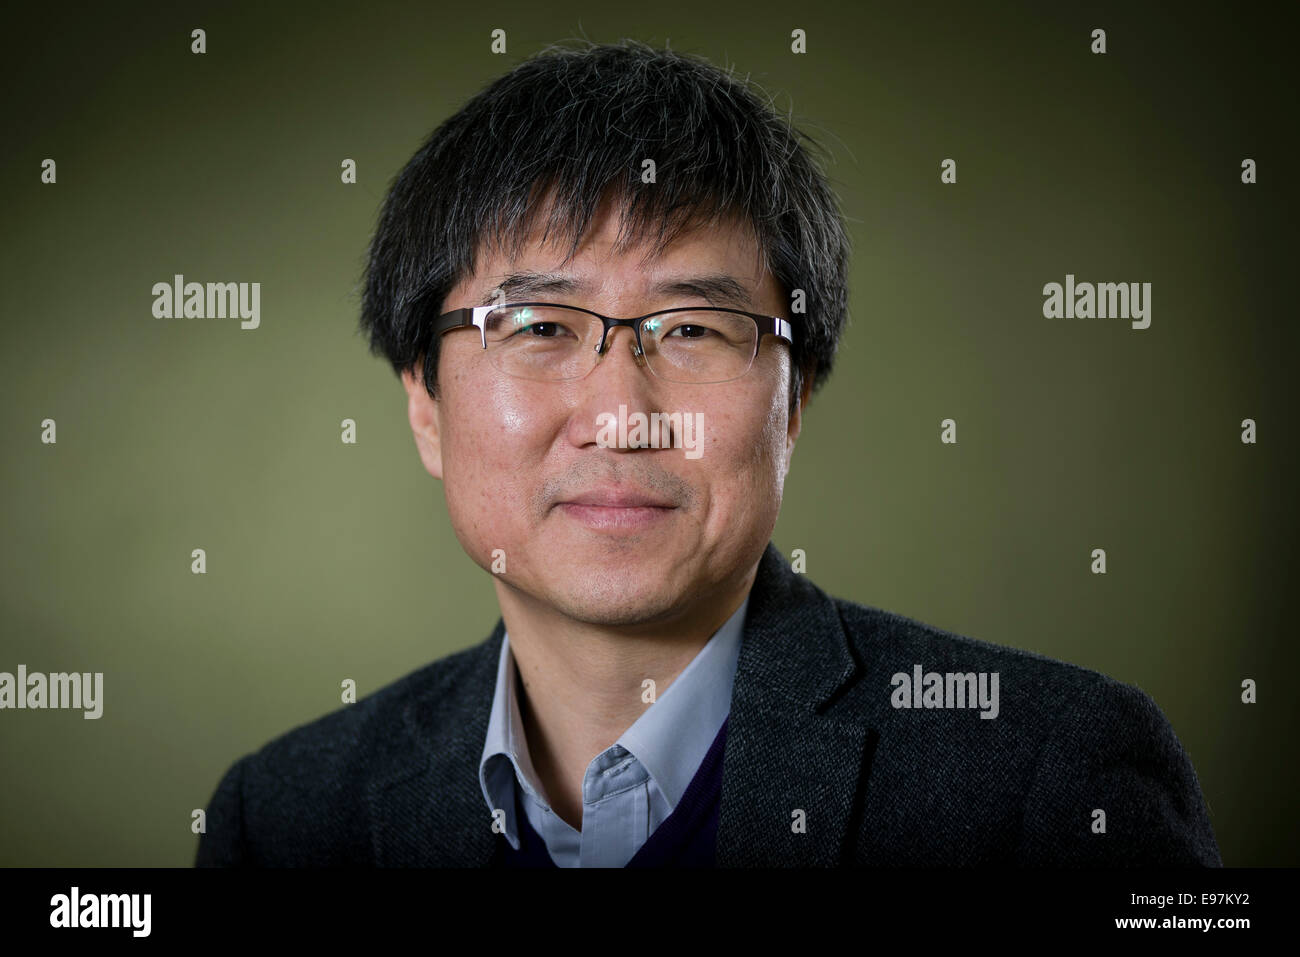 South-Korean economist Ha-Joon Chang appears at the Edinburgh International Book Festival. Stock Photo